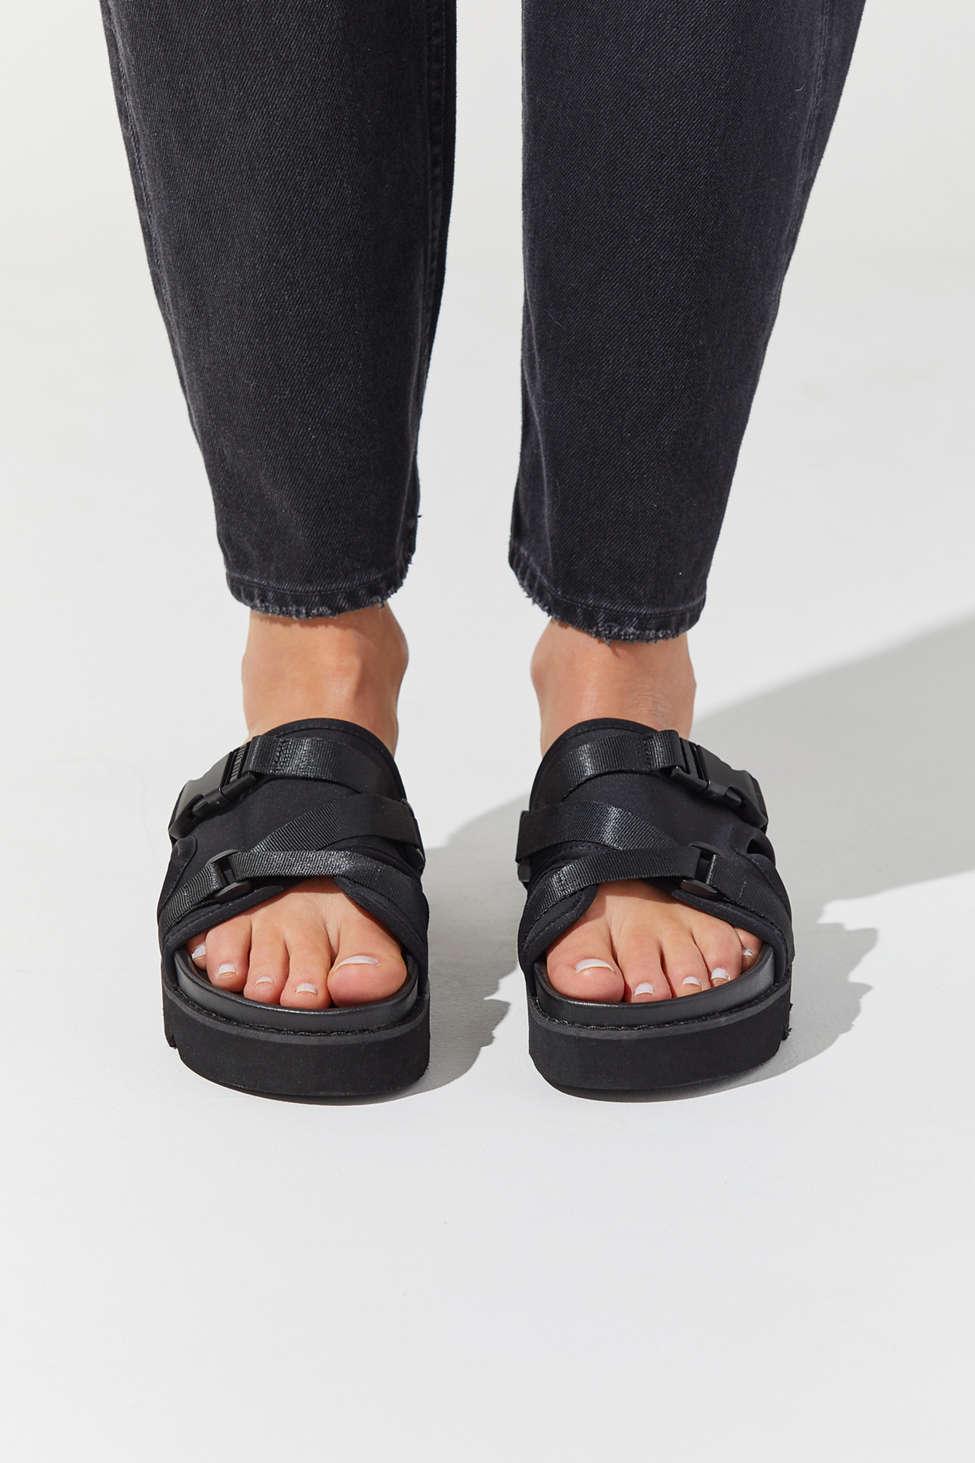 Urban Outfitters Uo Sport Slide Sandal in Black | Lyst